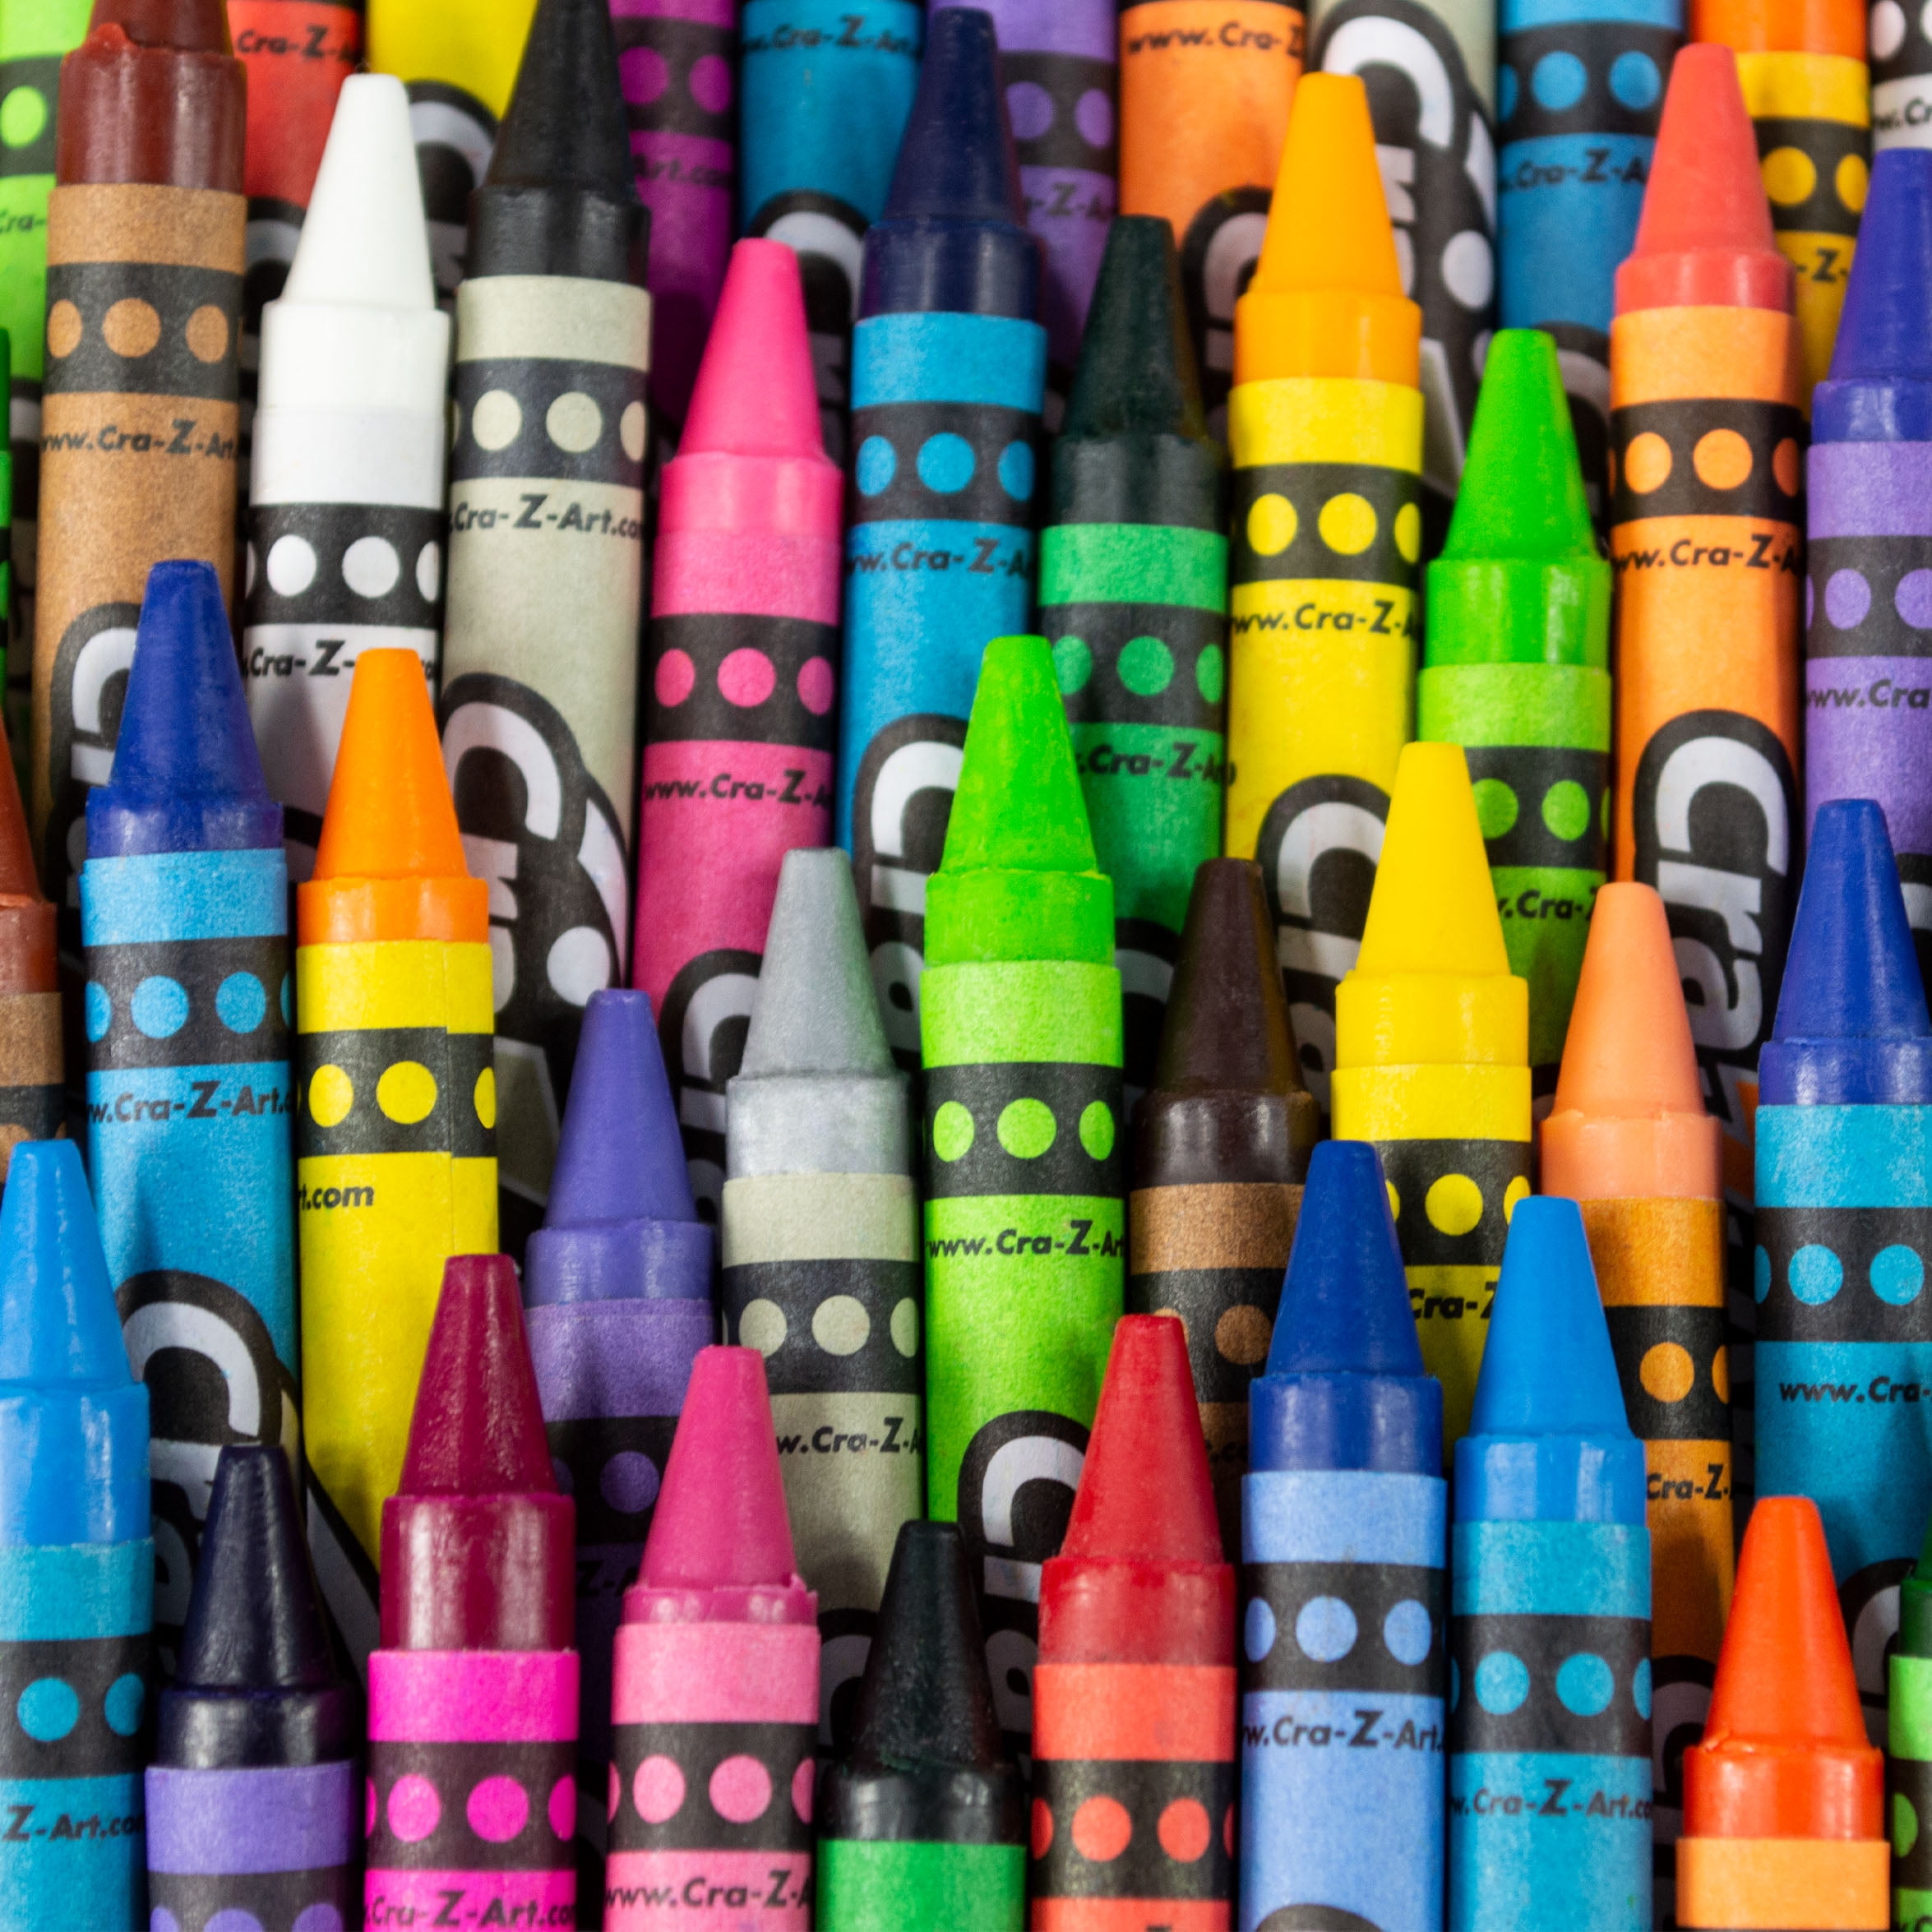 64 Count 10202 Cra-Z-art Crayons 